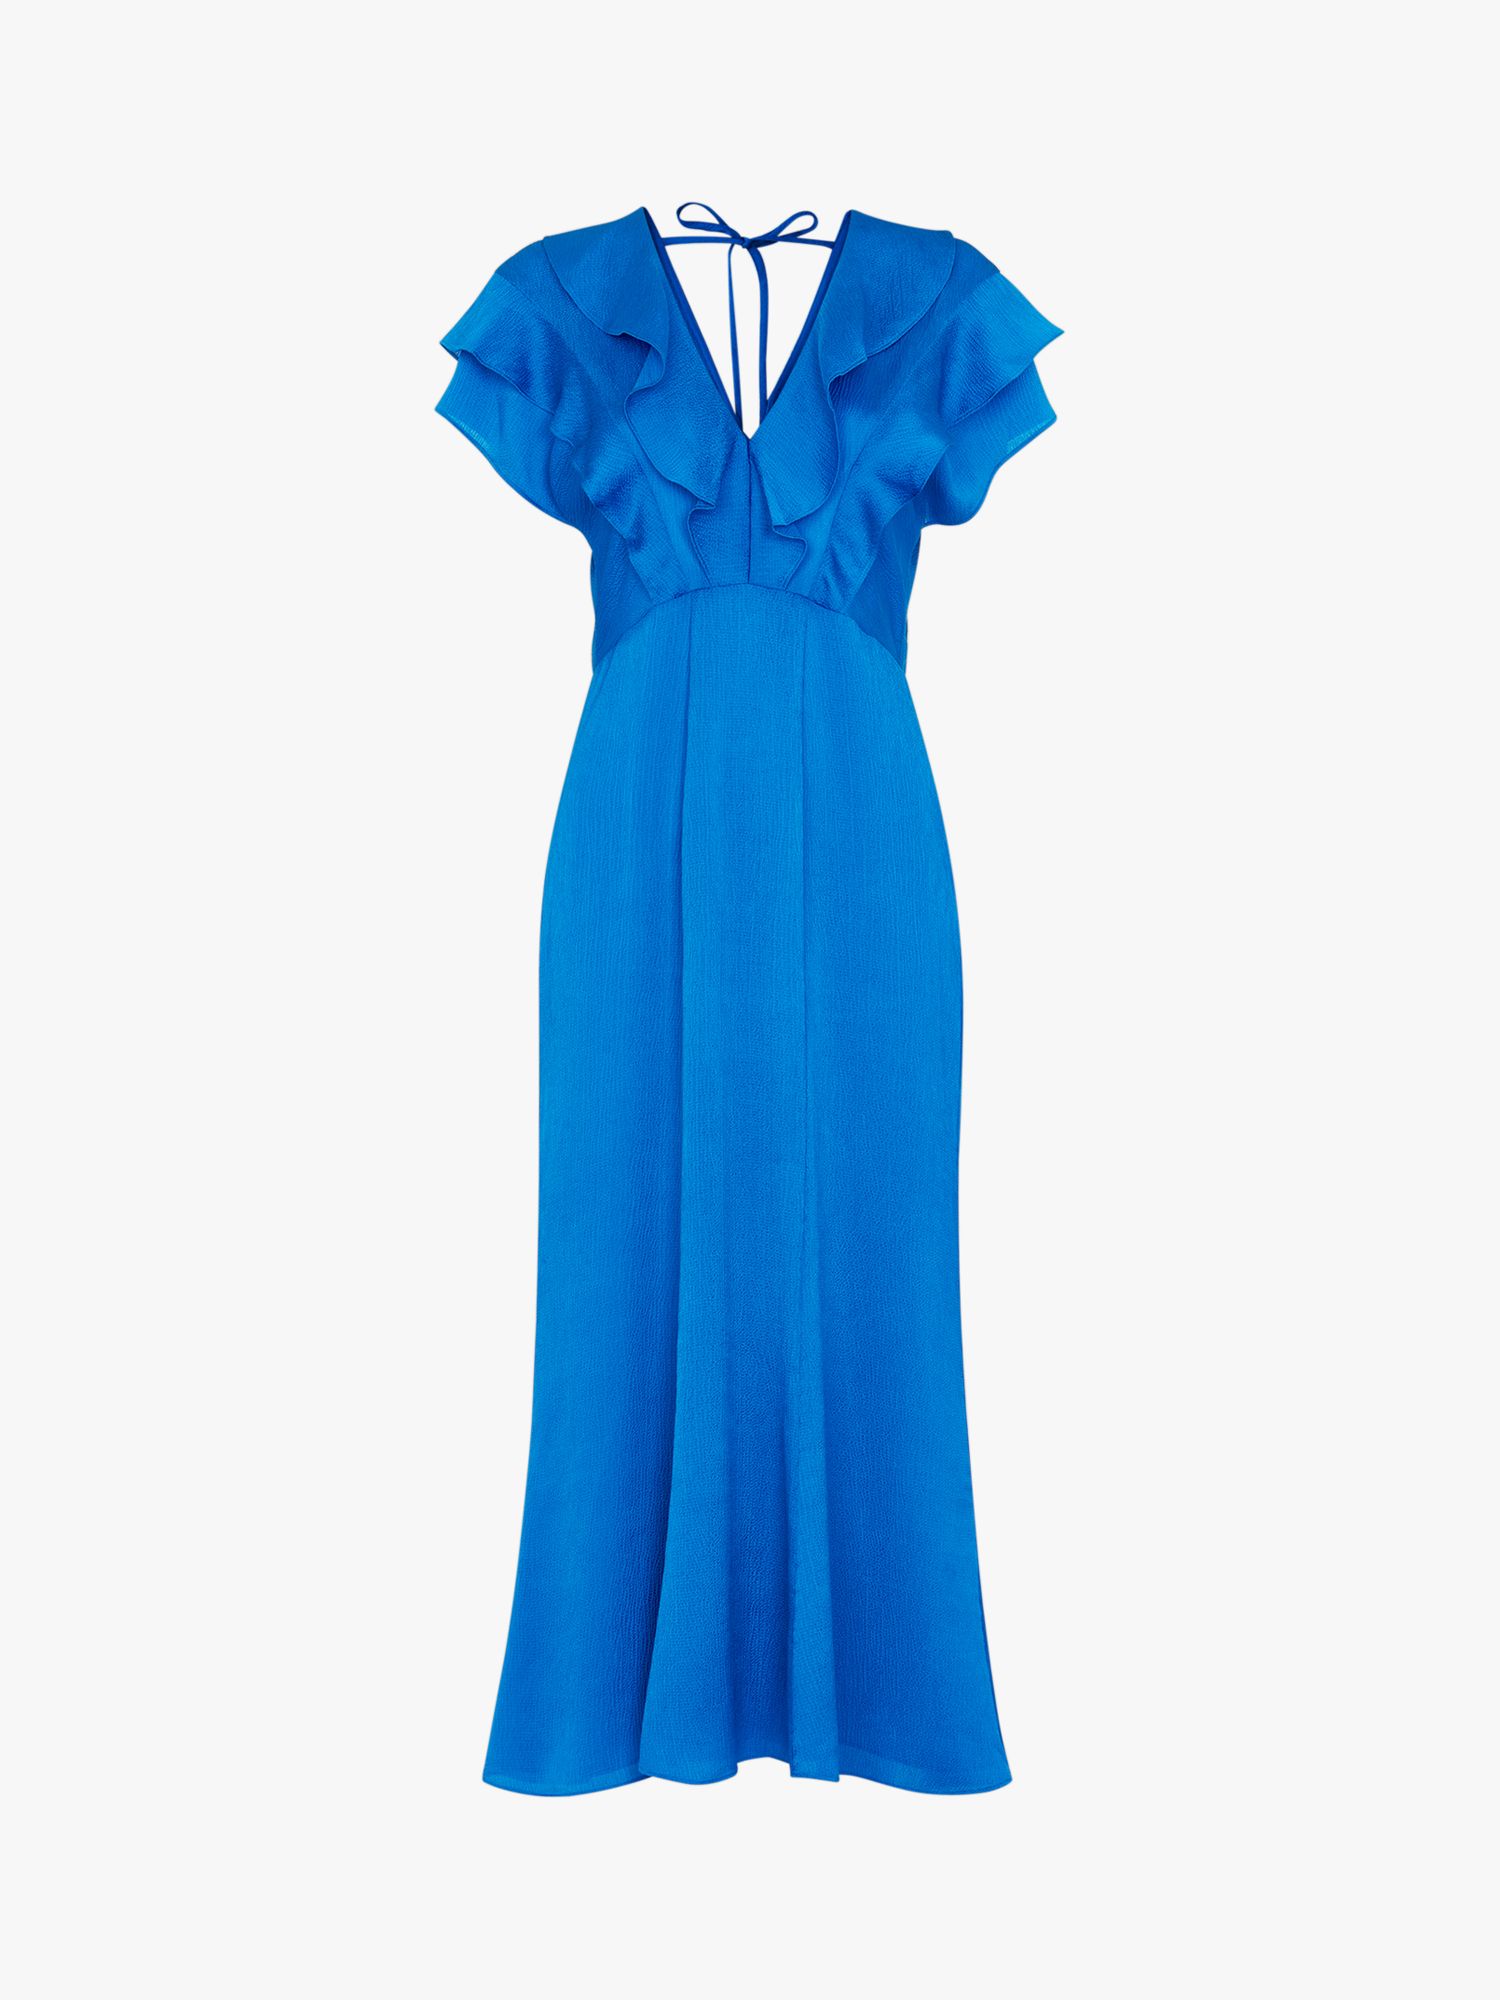 Whistles Adeline Frill Midi Dress, Bright Blue at John Lewis & Partners